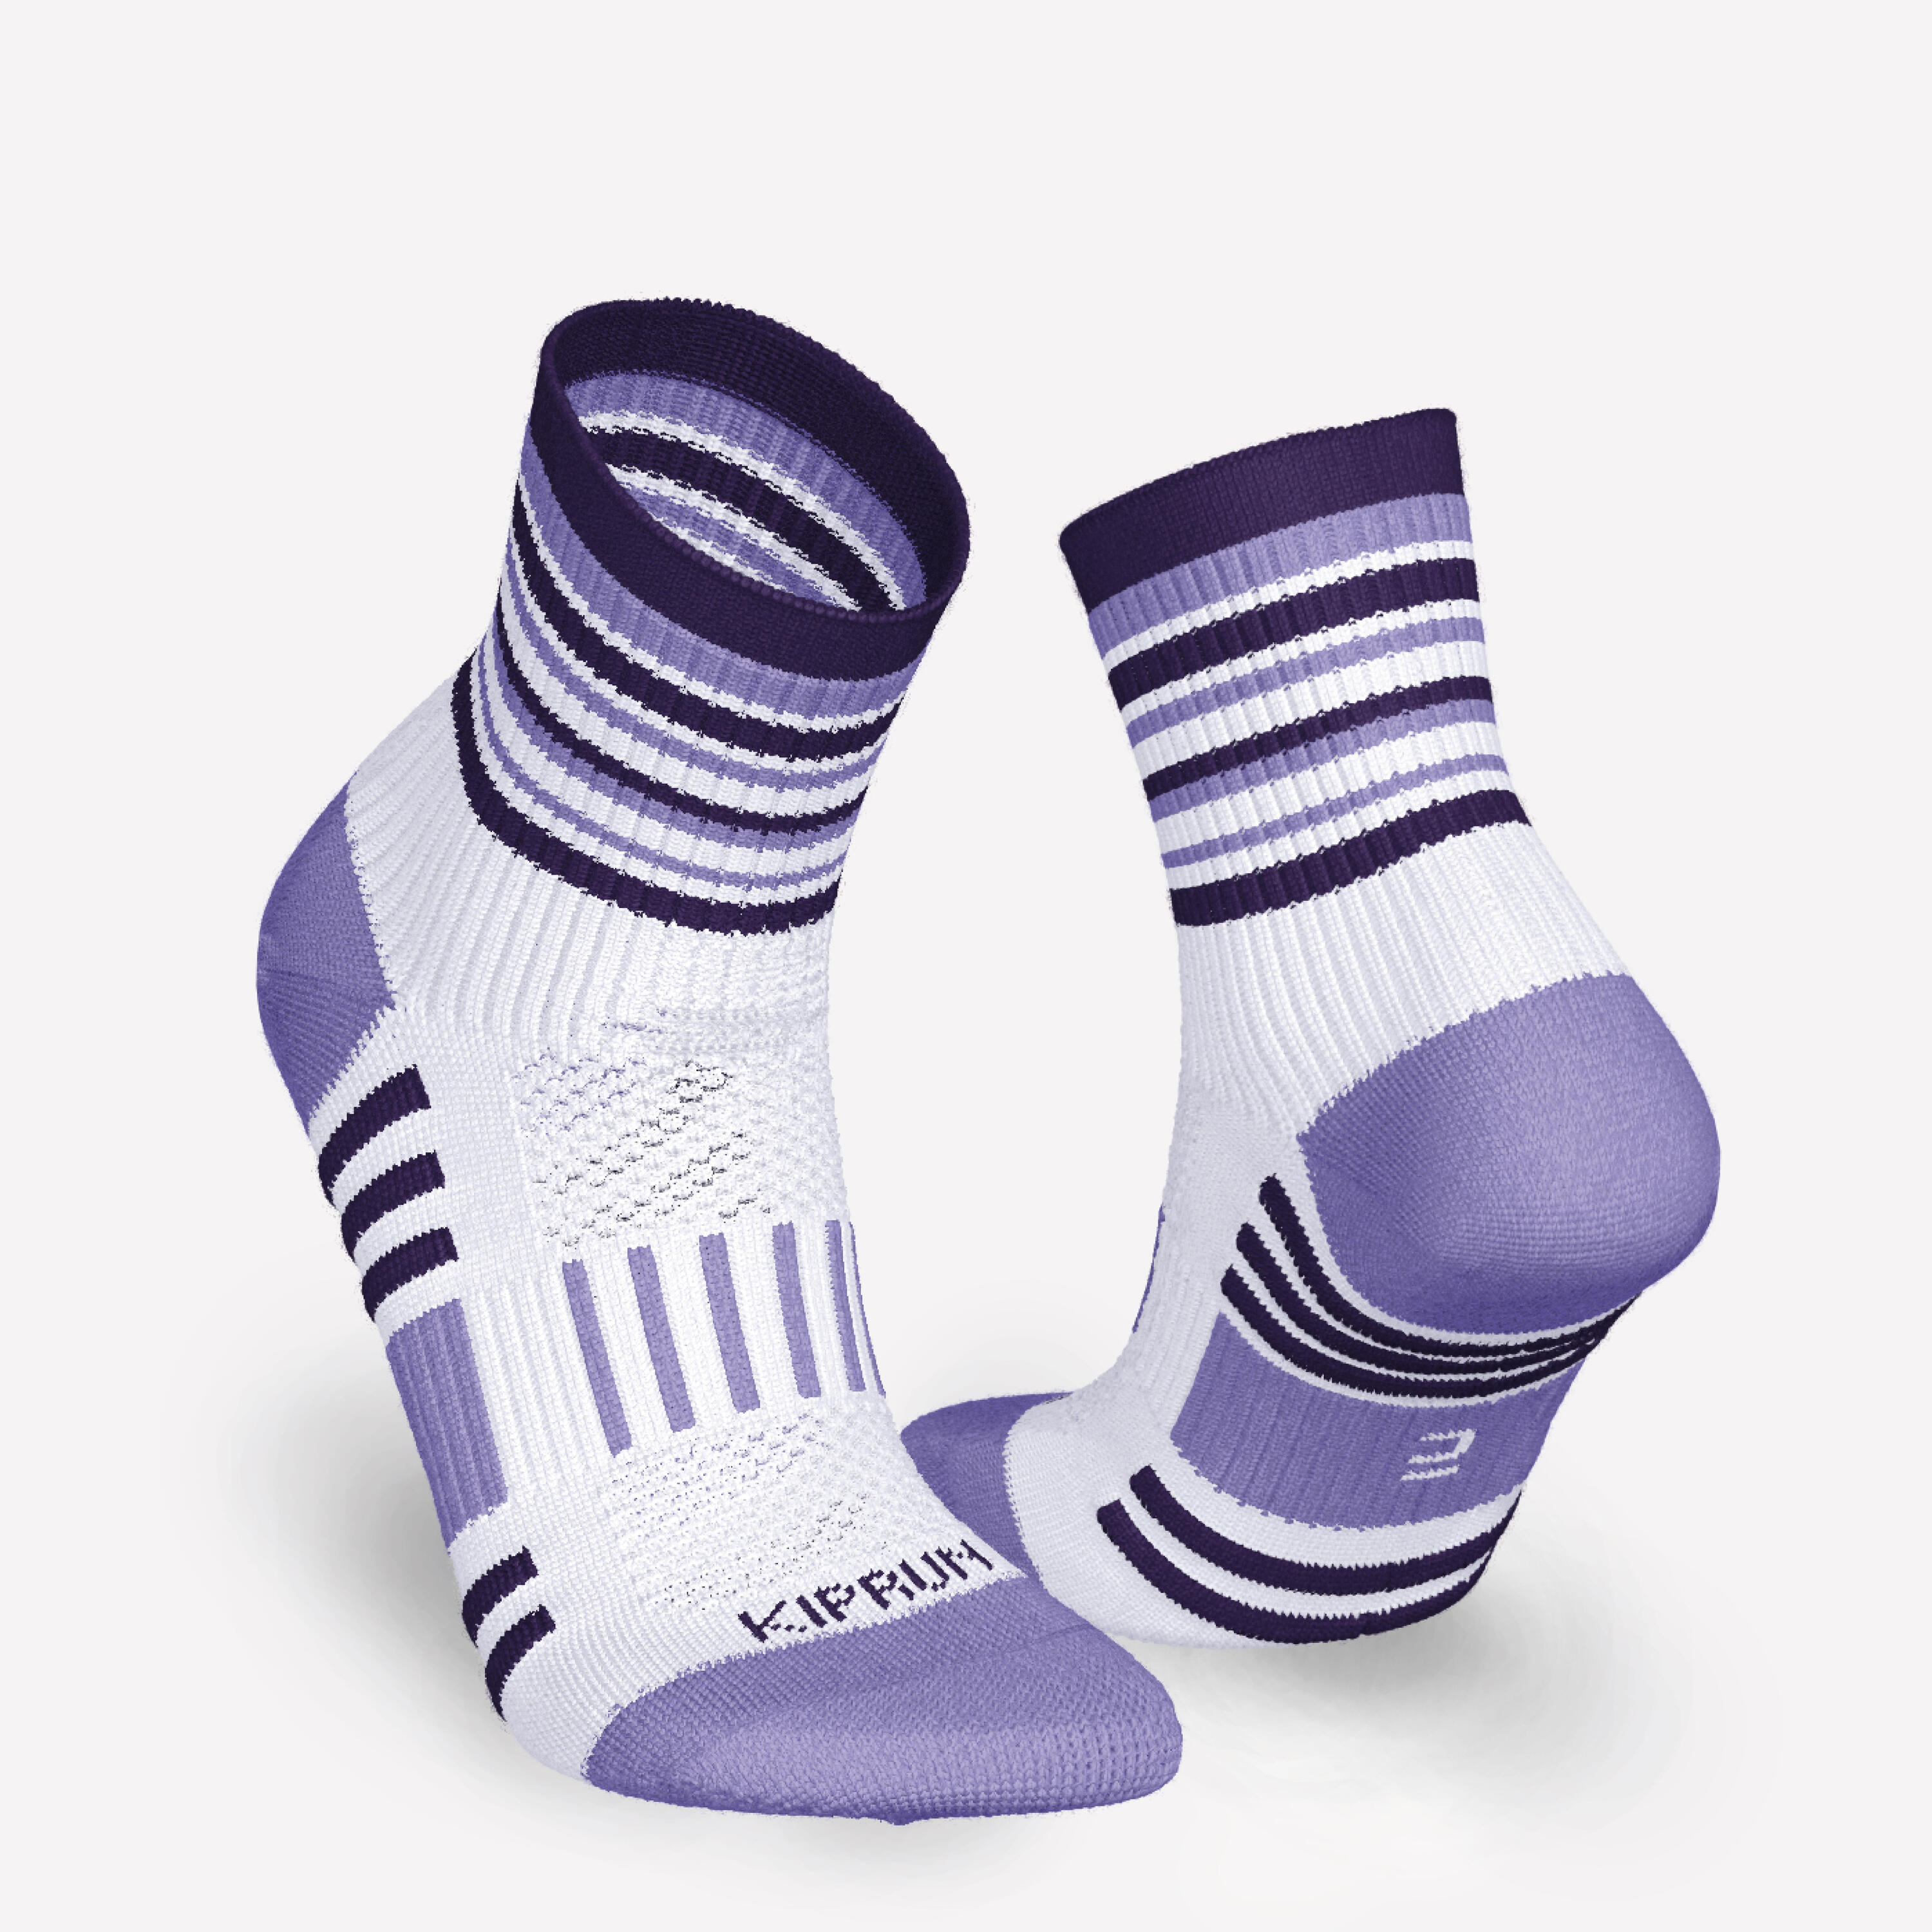 KIPRUN 500 mid kids' comfort running socks 2-pack - striped and plain purple 3/11